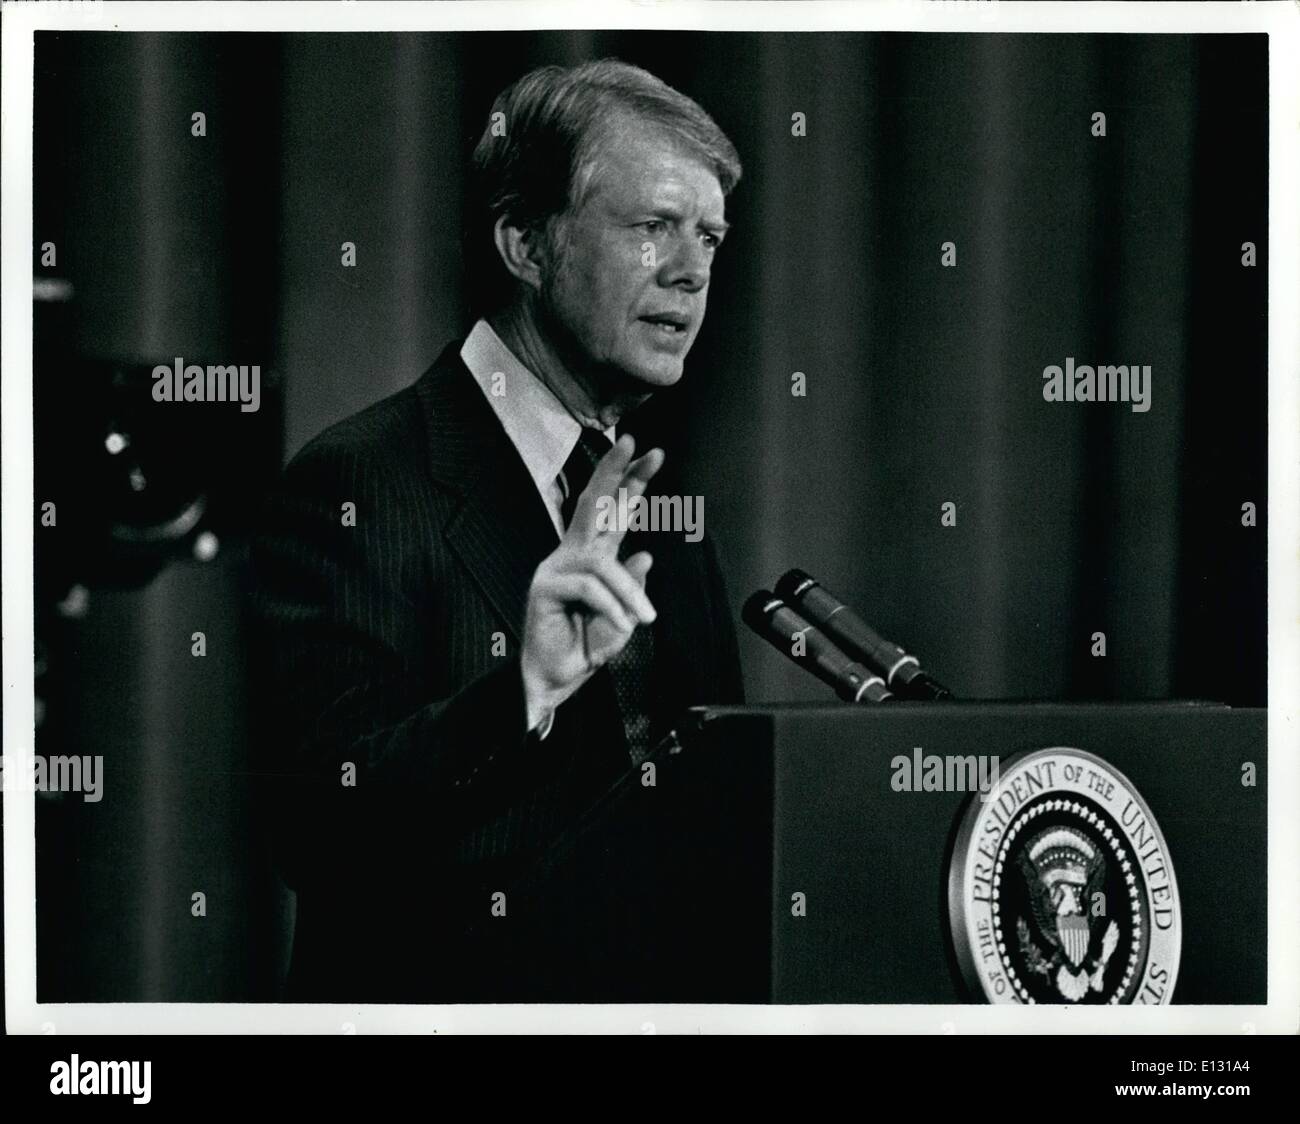 Feb. 26, 2012 - President Jimmy Carter address on inflation to the American Society of Newspaper Editors, Washington Hilton, Washington D.C. Stock Photo